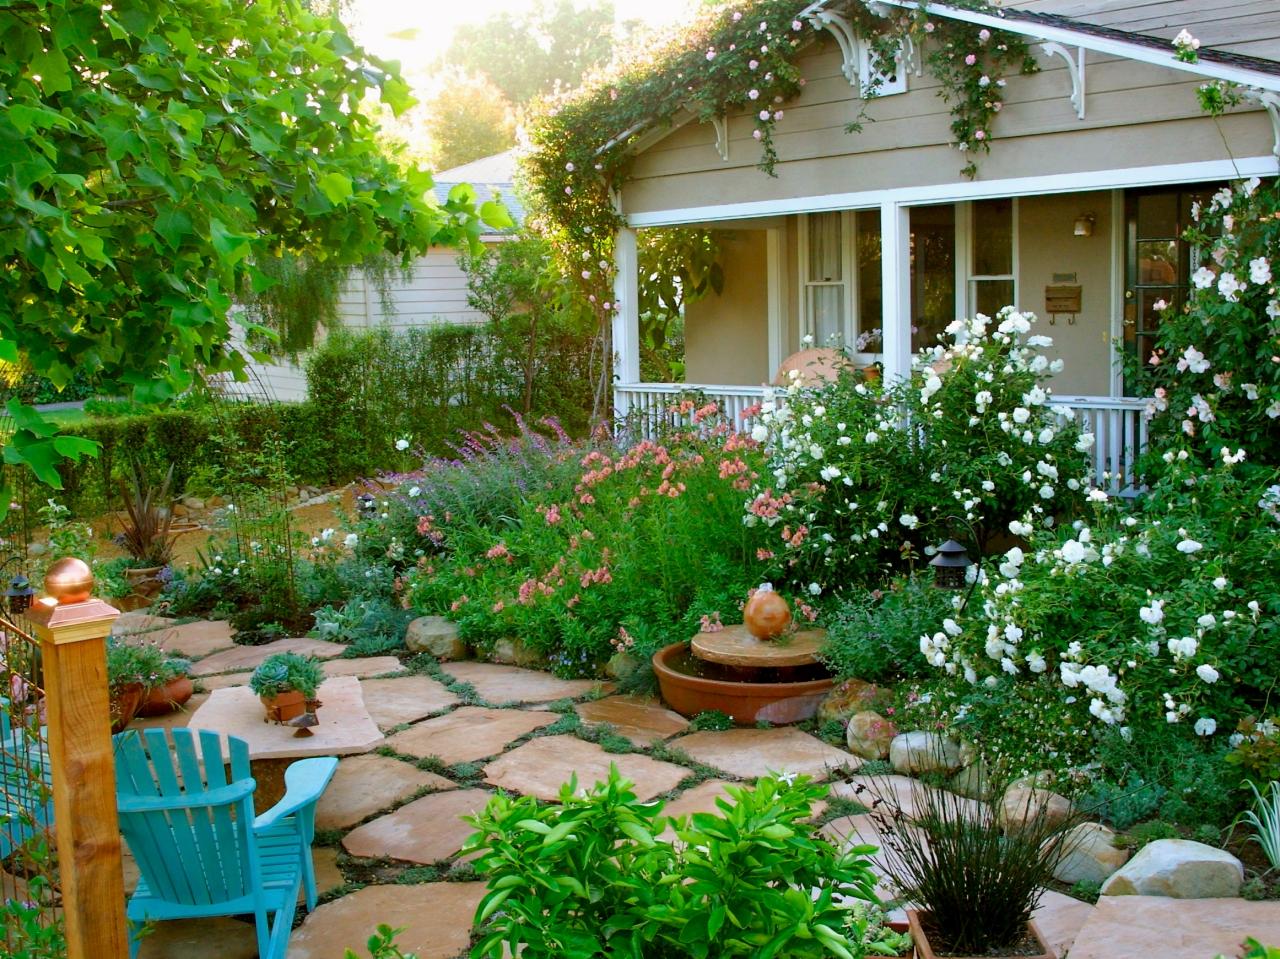 20 Dreamy Cottage Gardens   HGTV's Decorating & Design Blog   HGTV